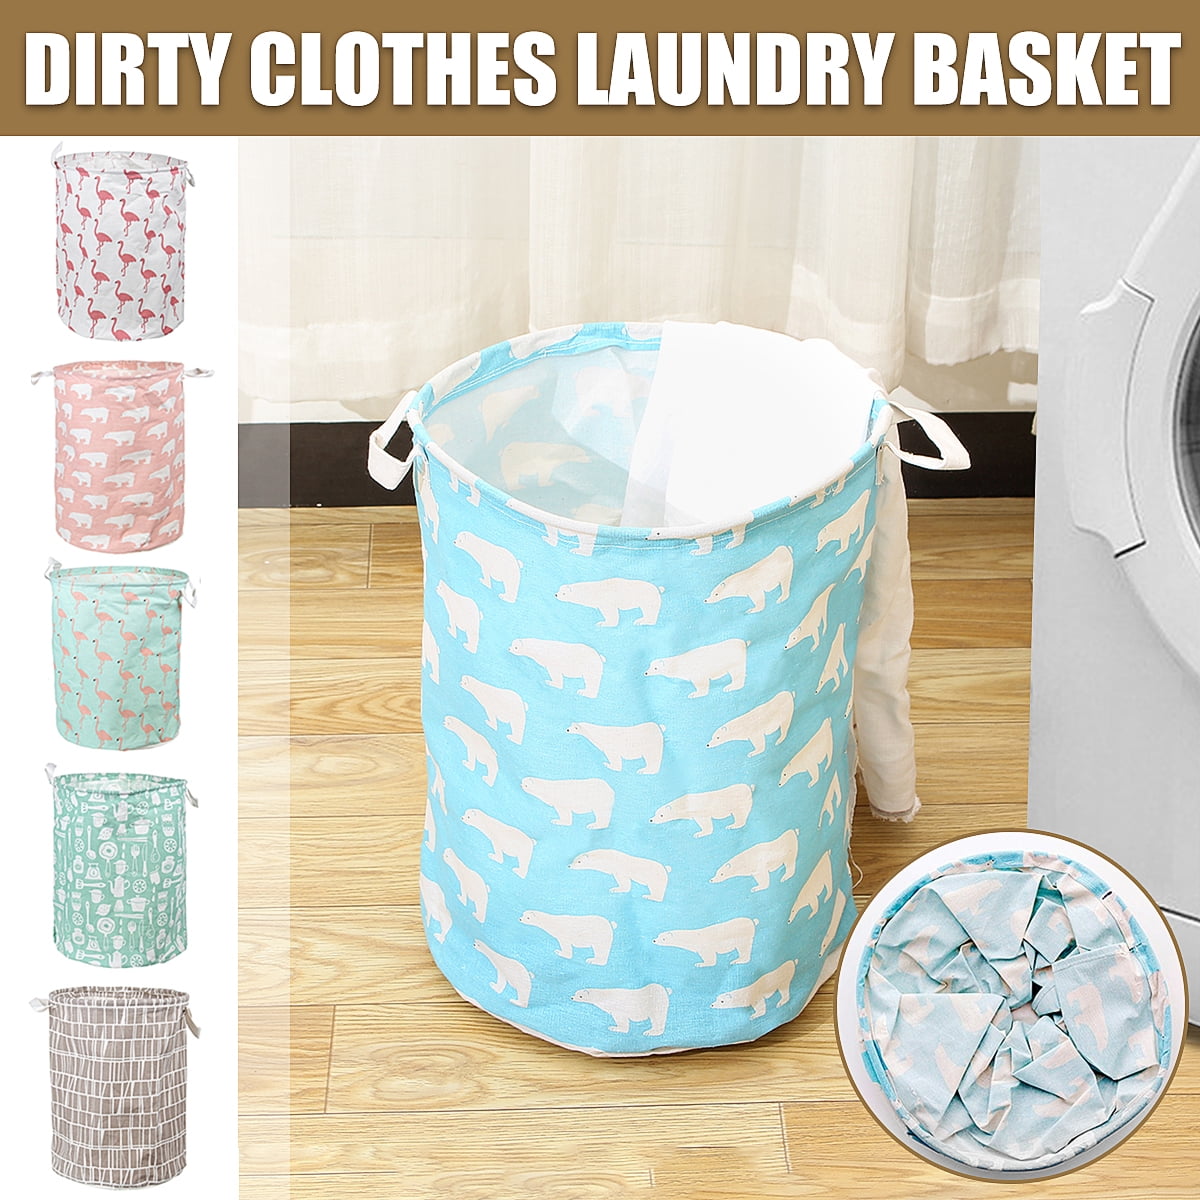 Details about   Foldable Large Laundry Hamper Storage Dirty Clothes Bag Washing Basket Organizer 